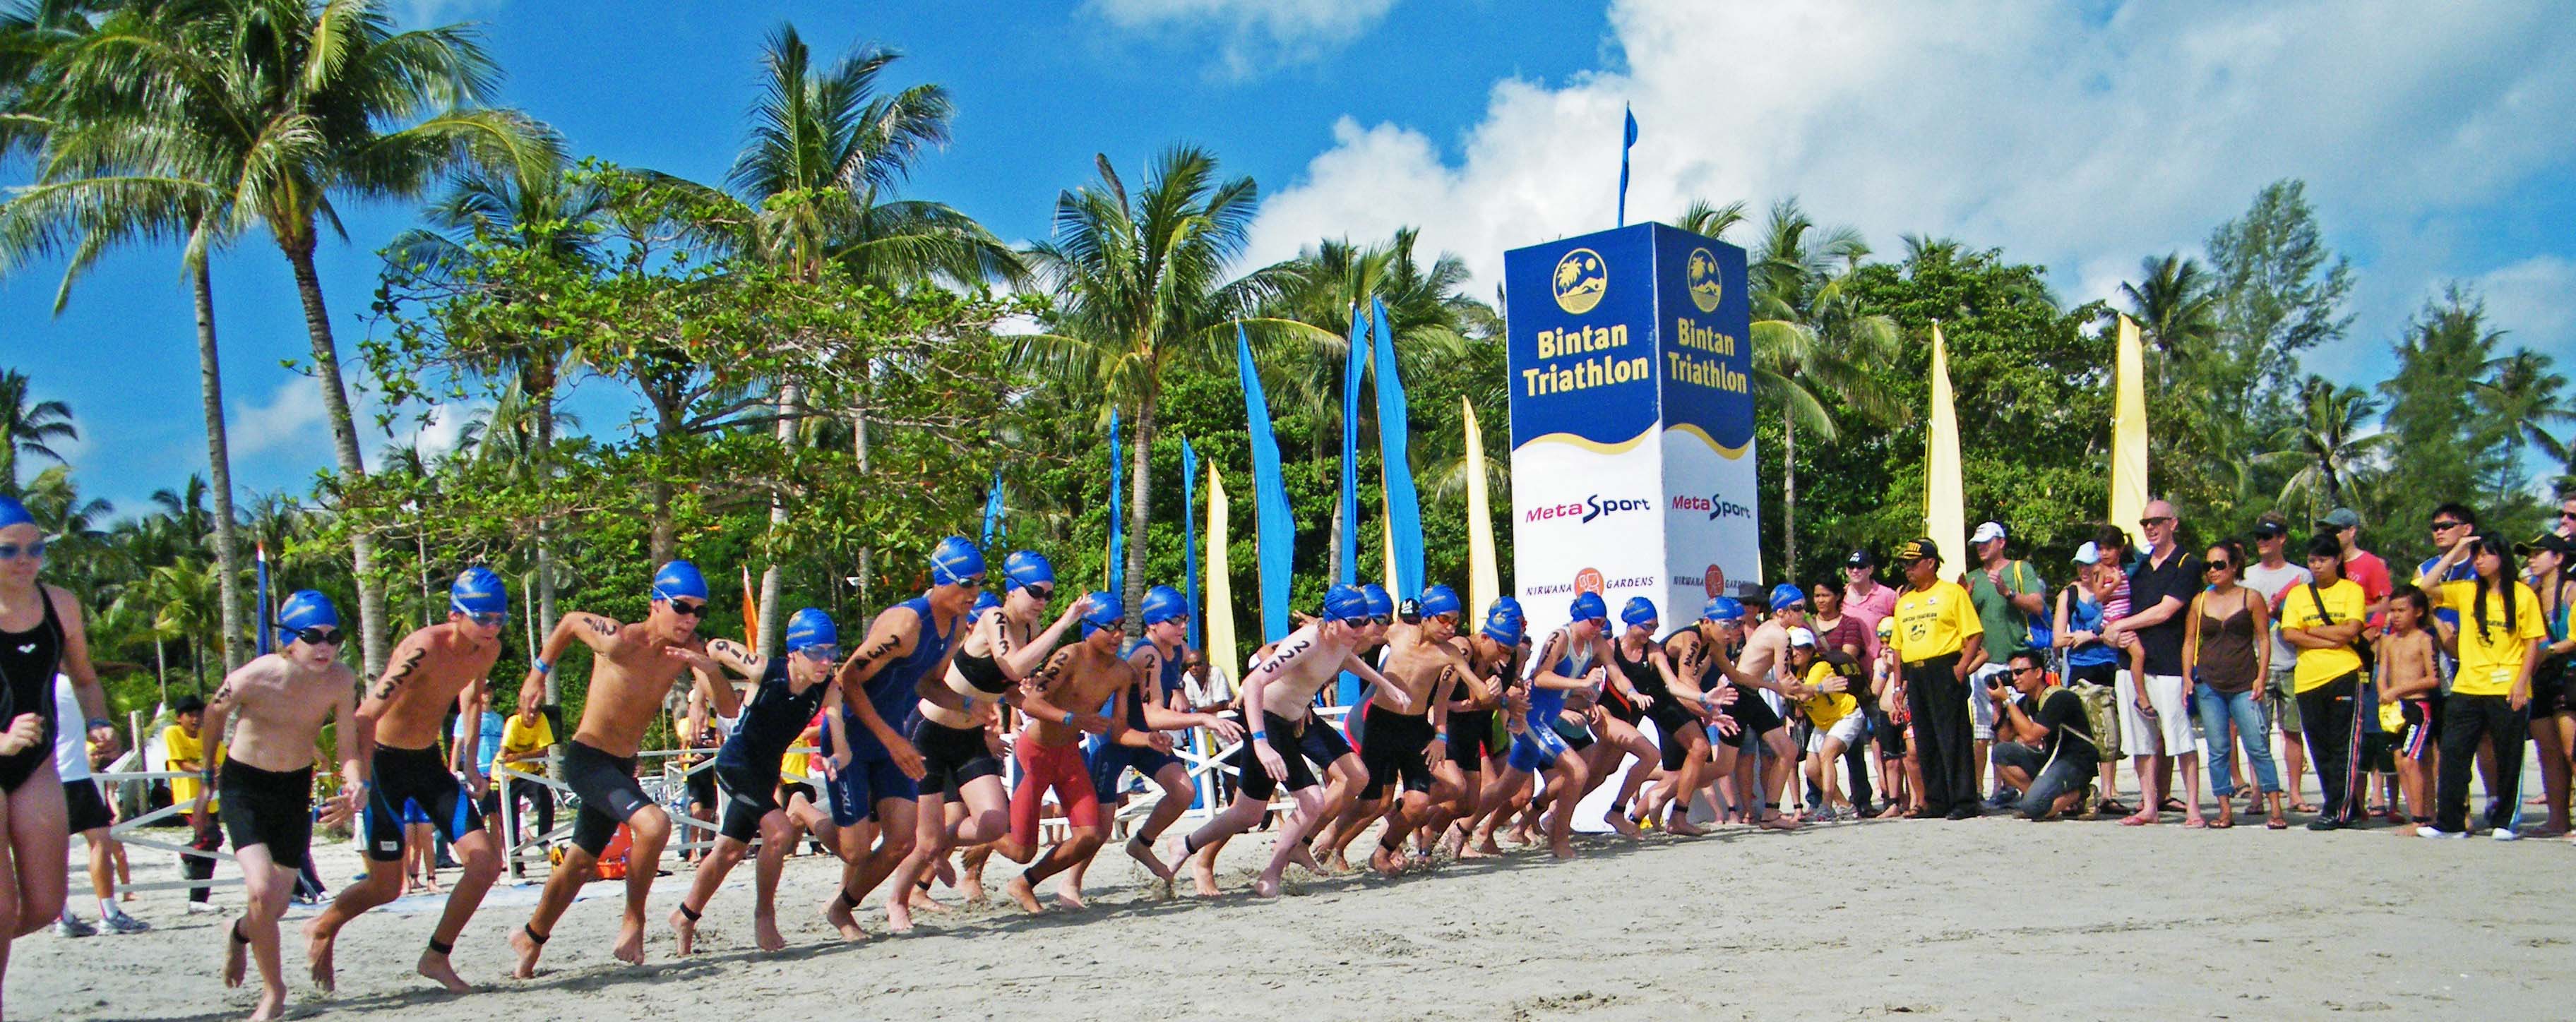 Bintan Triathlon